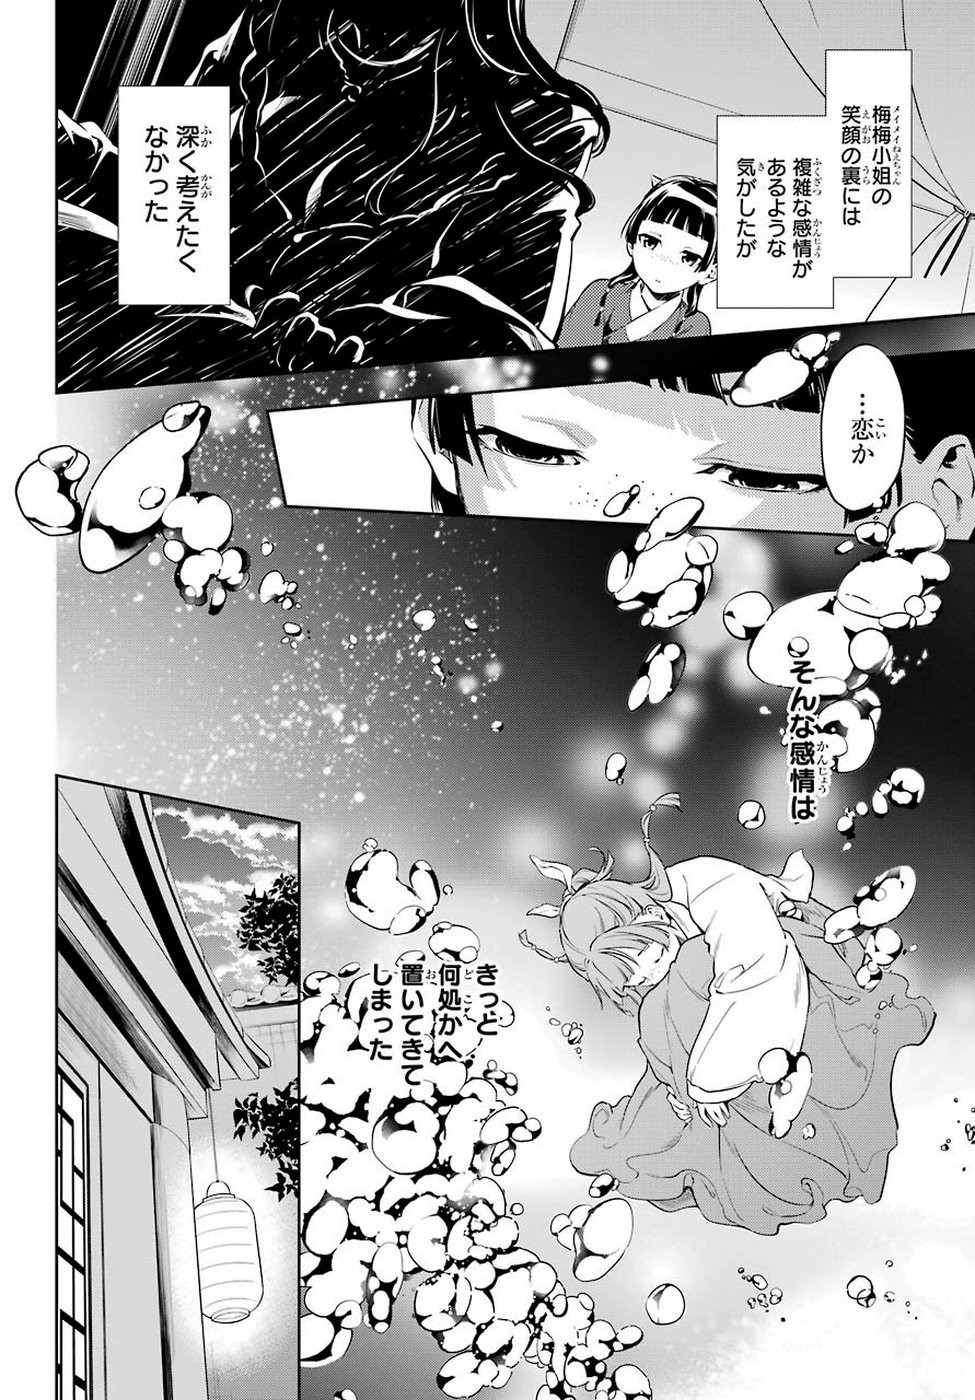 Kusuriya no Hitorigoto - Chapter 29.1 - Page 4